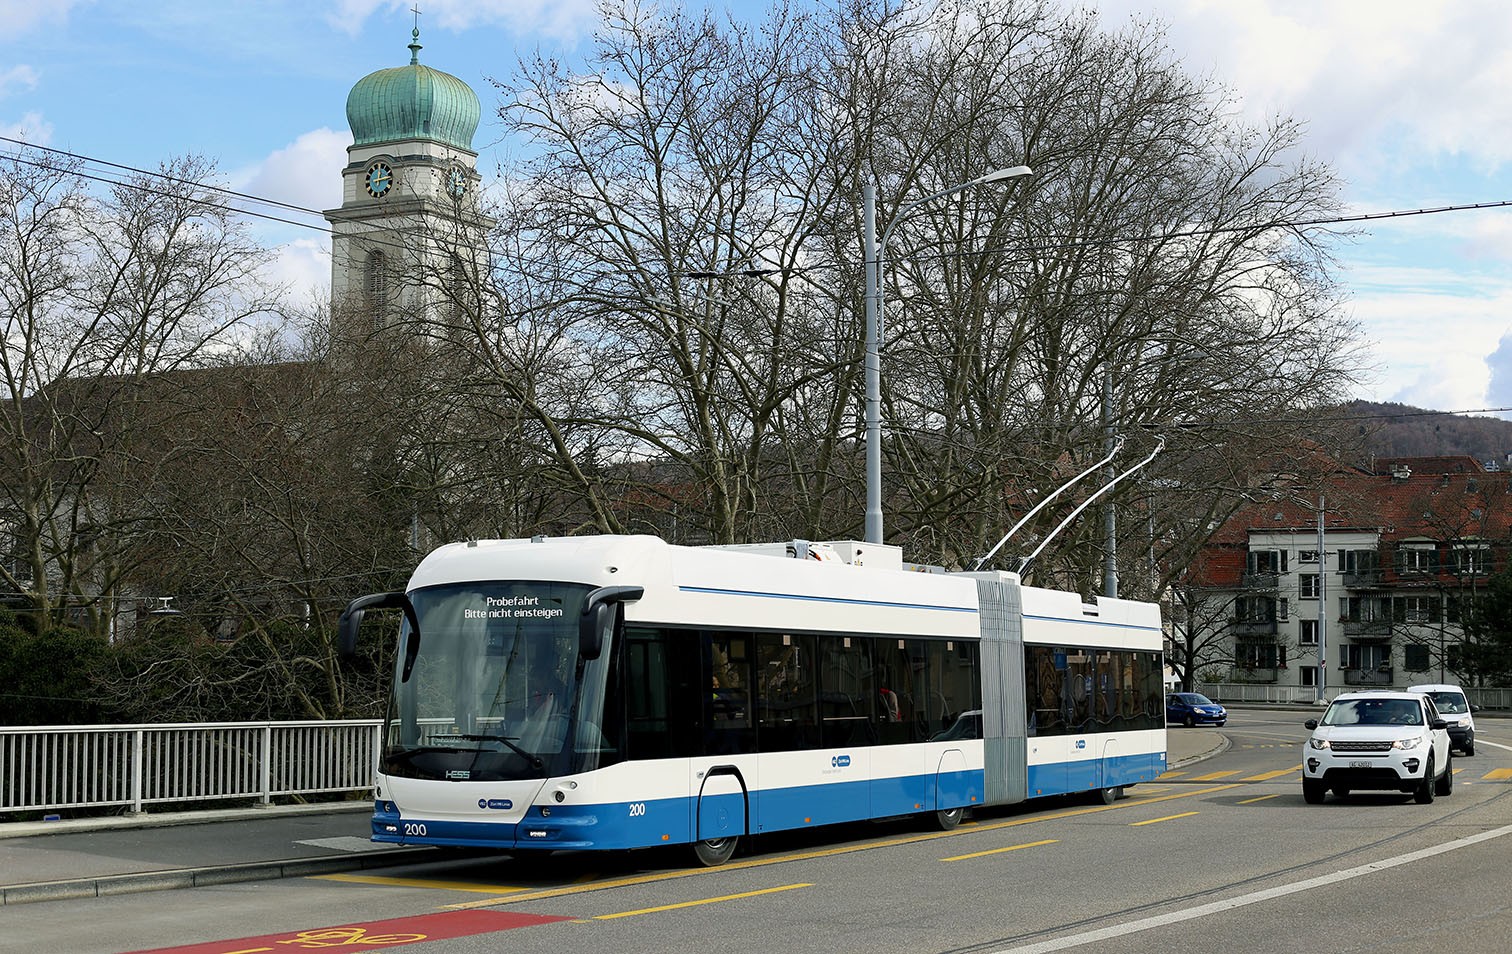 VBZ-Buslinie 83